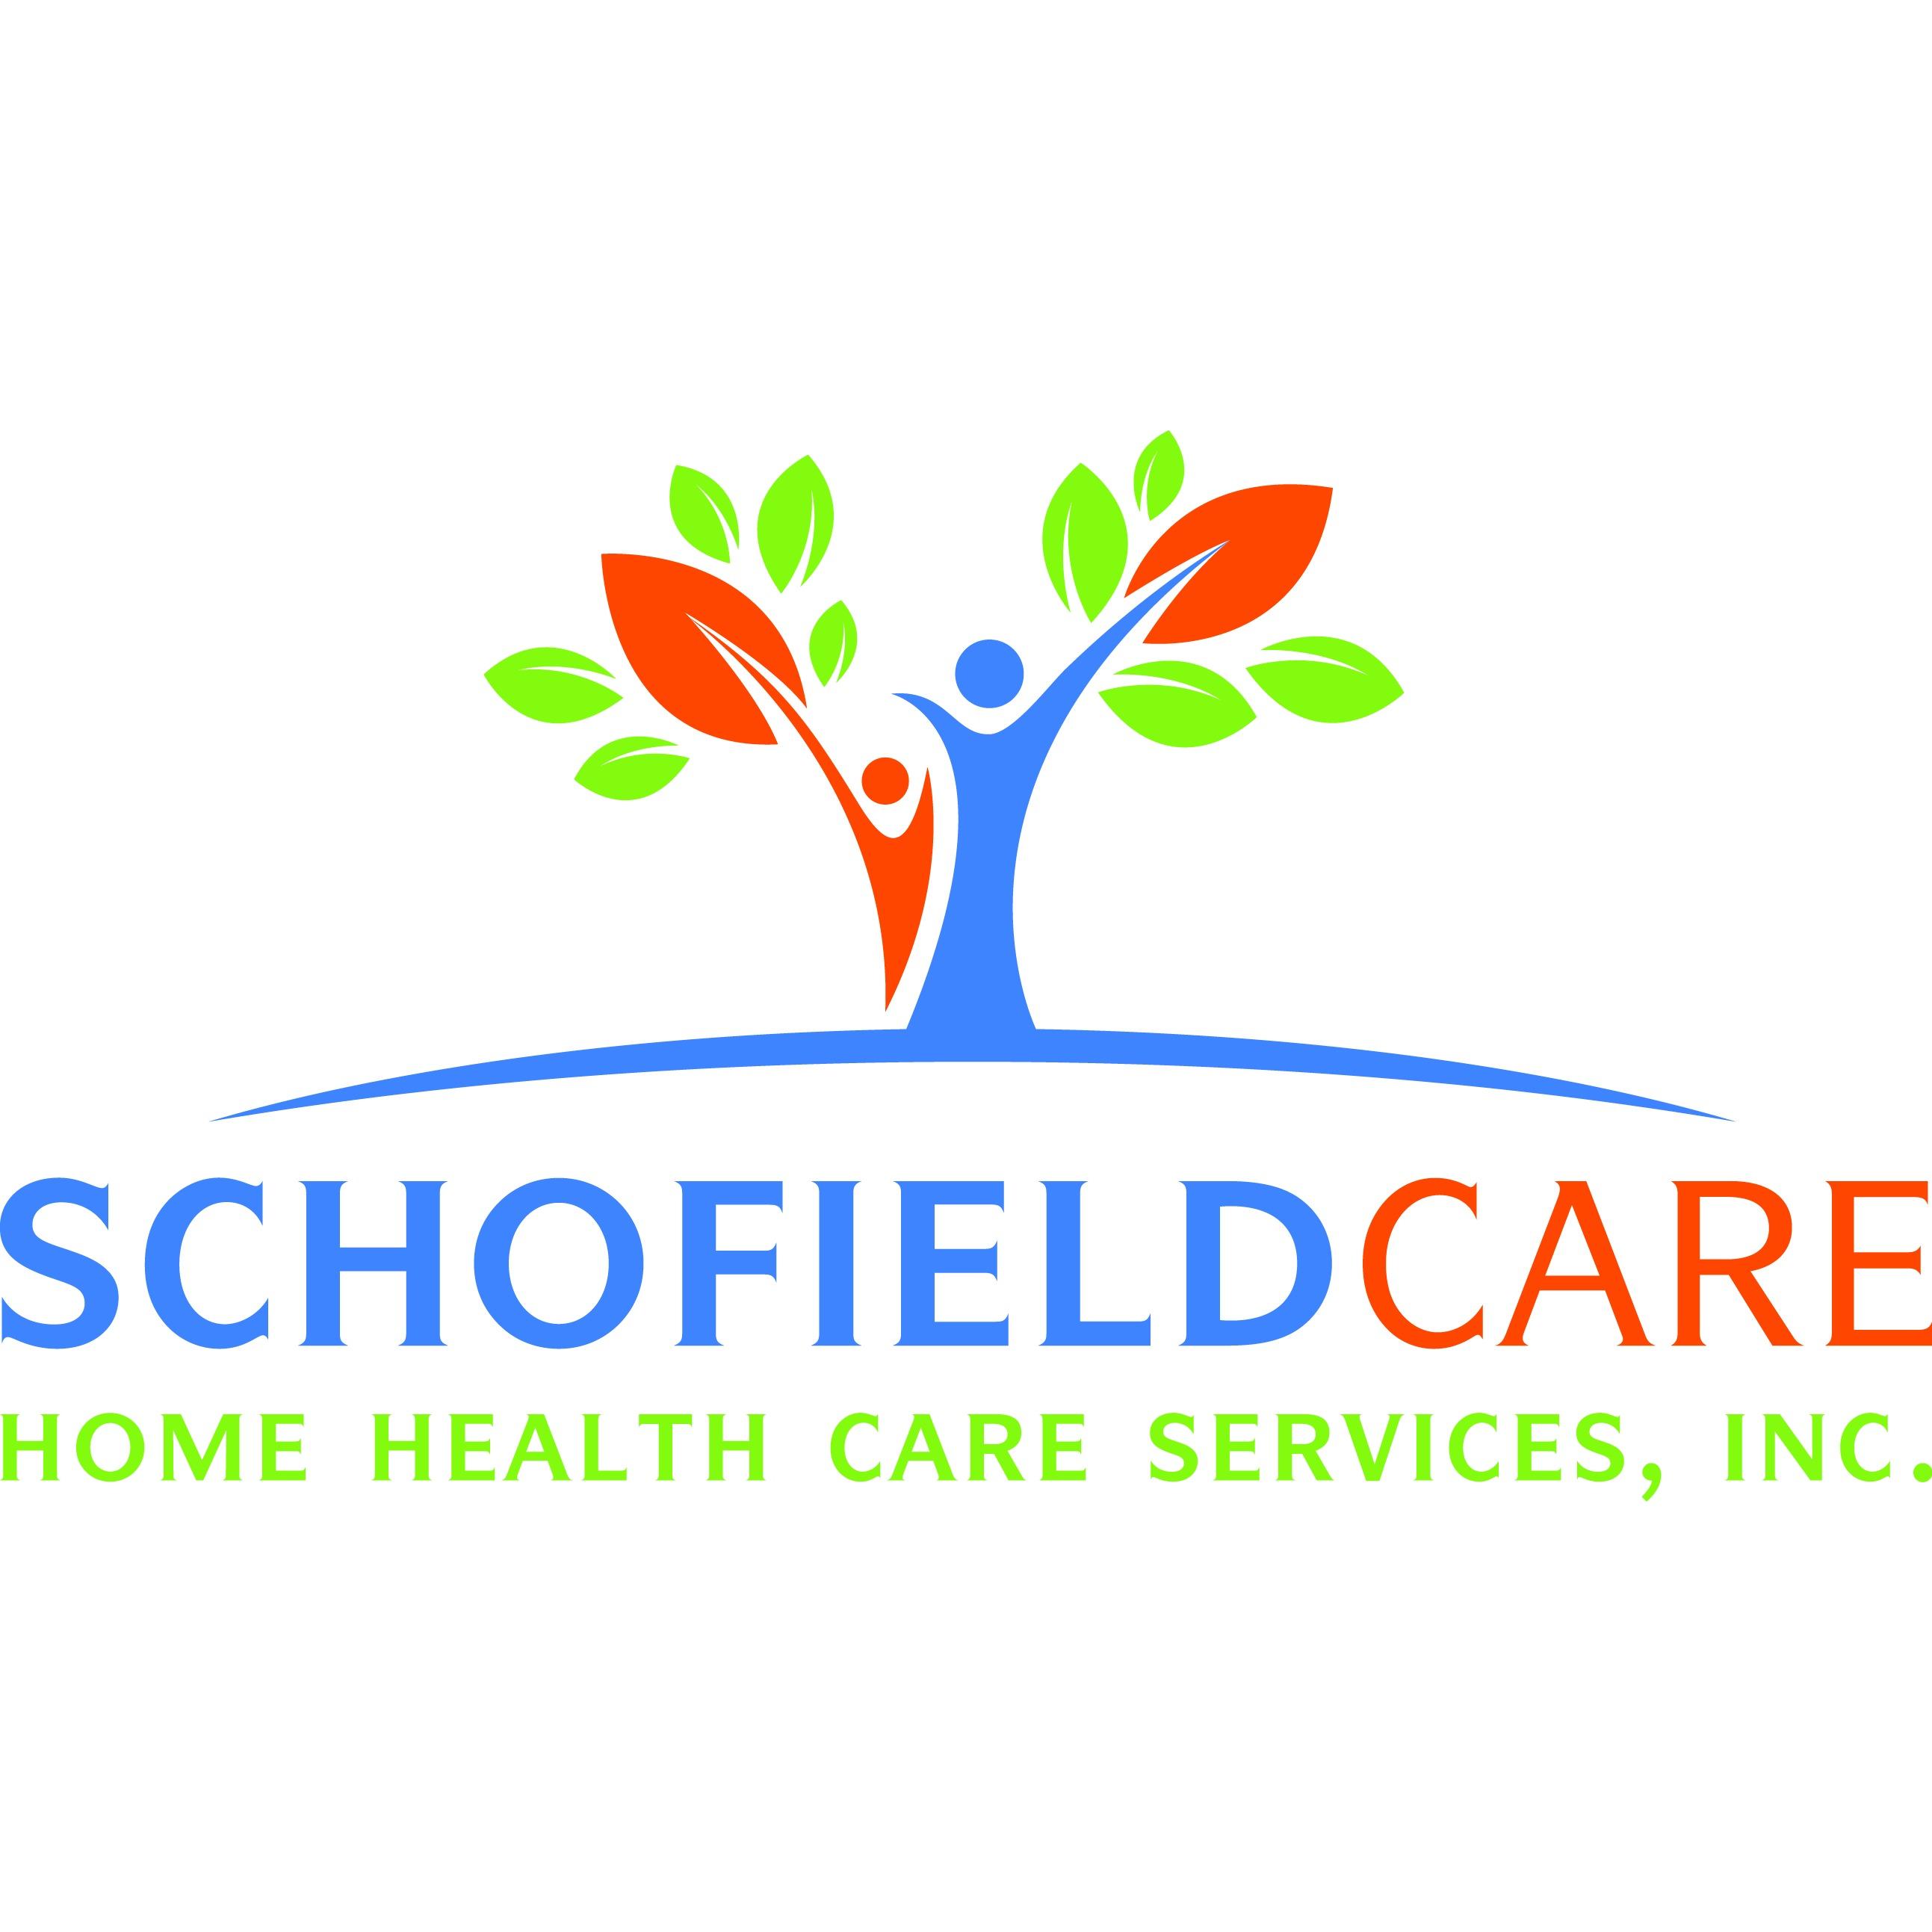 Schofield Home Health Care Services - Buffalo, NY 14217 - (716)874-2600 | ShowMeLocal.com